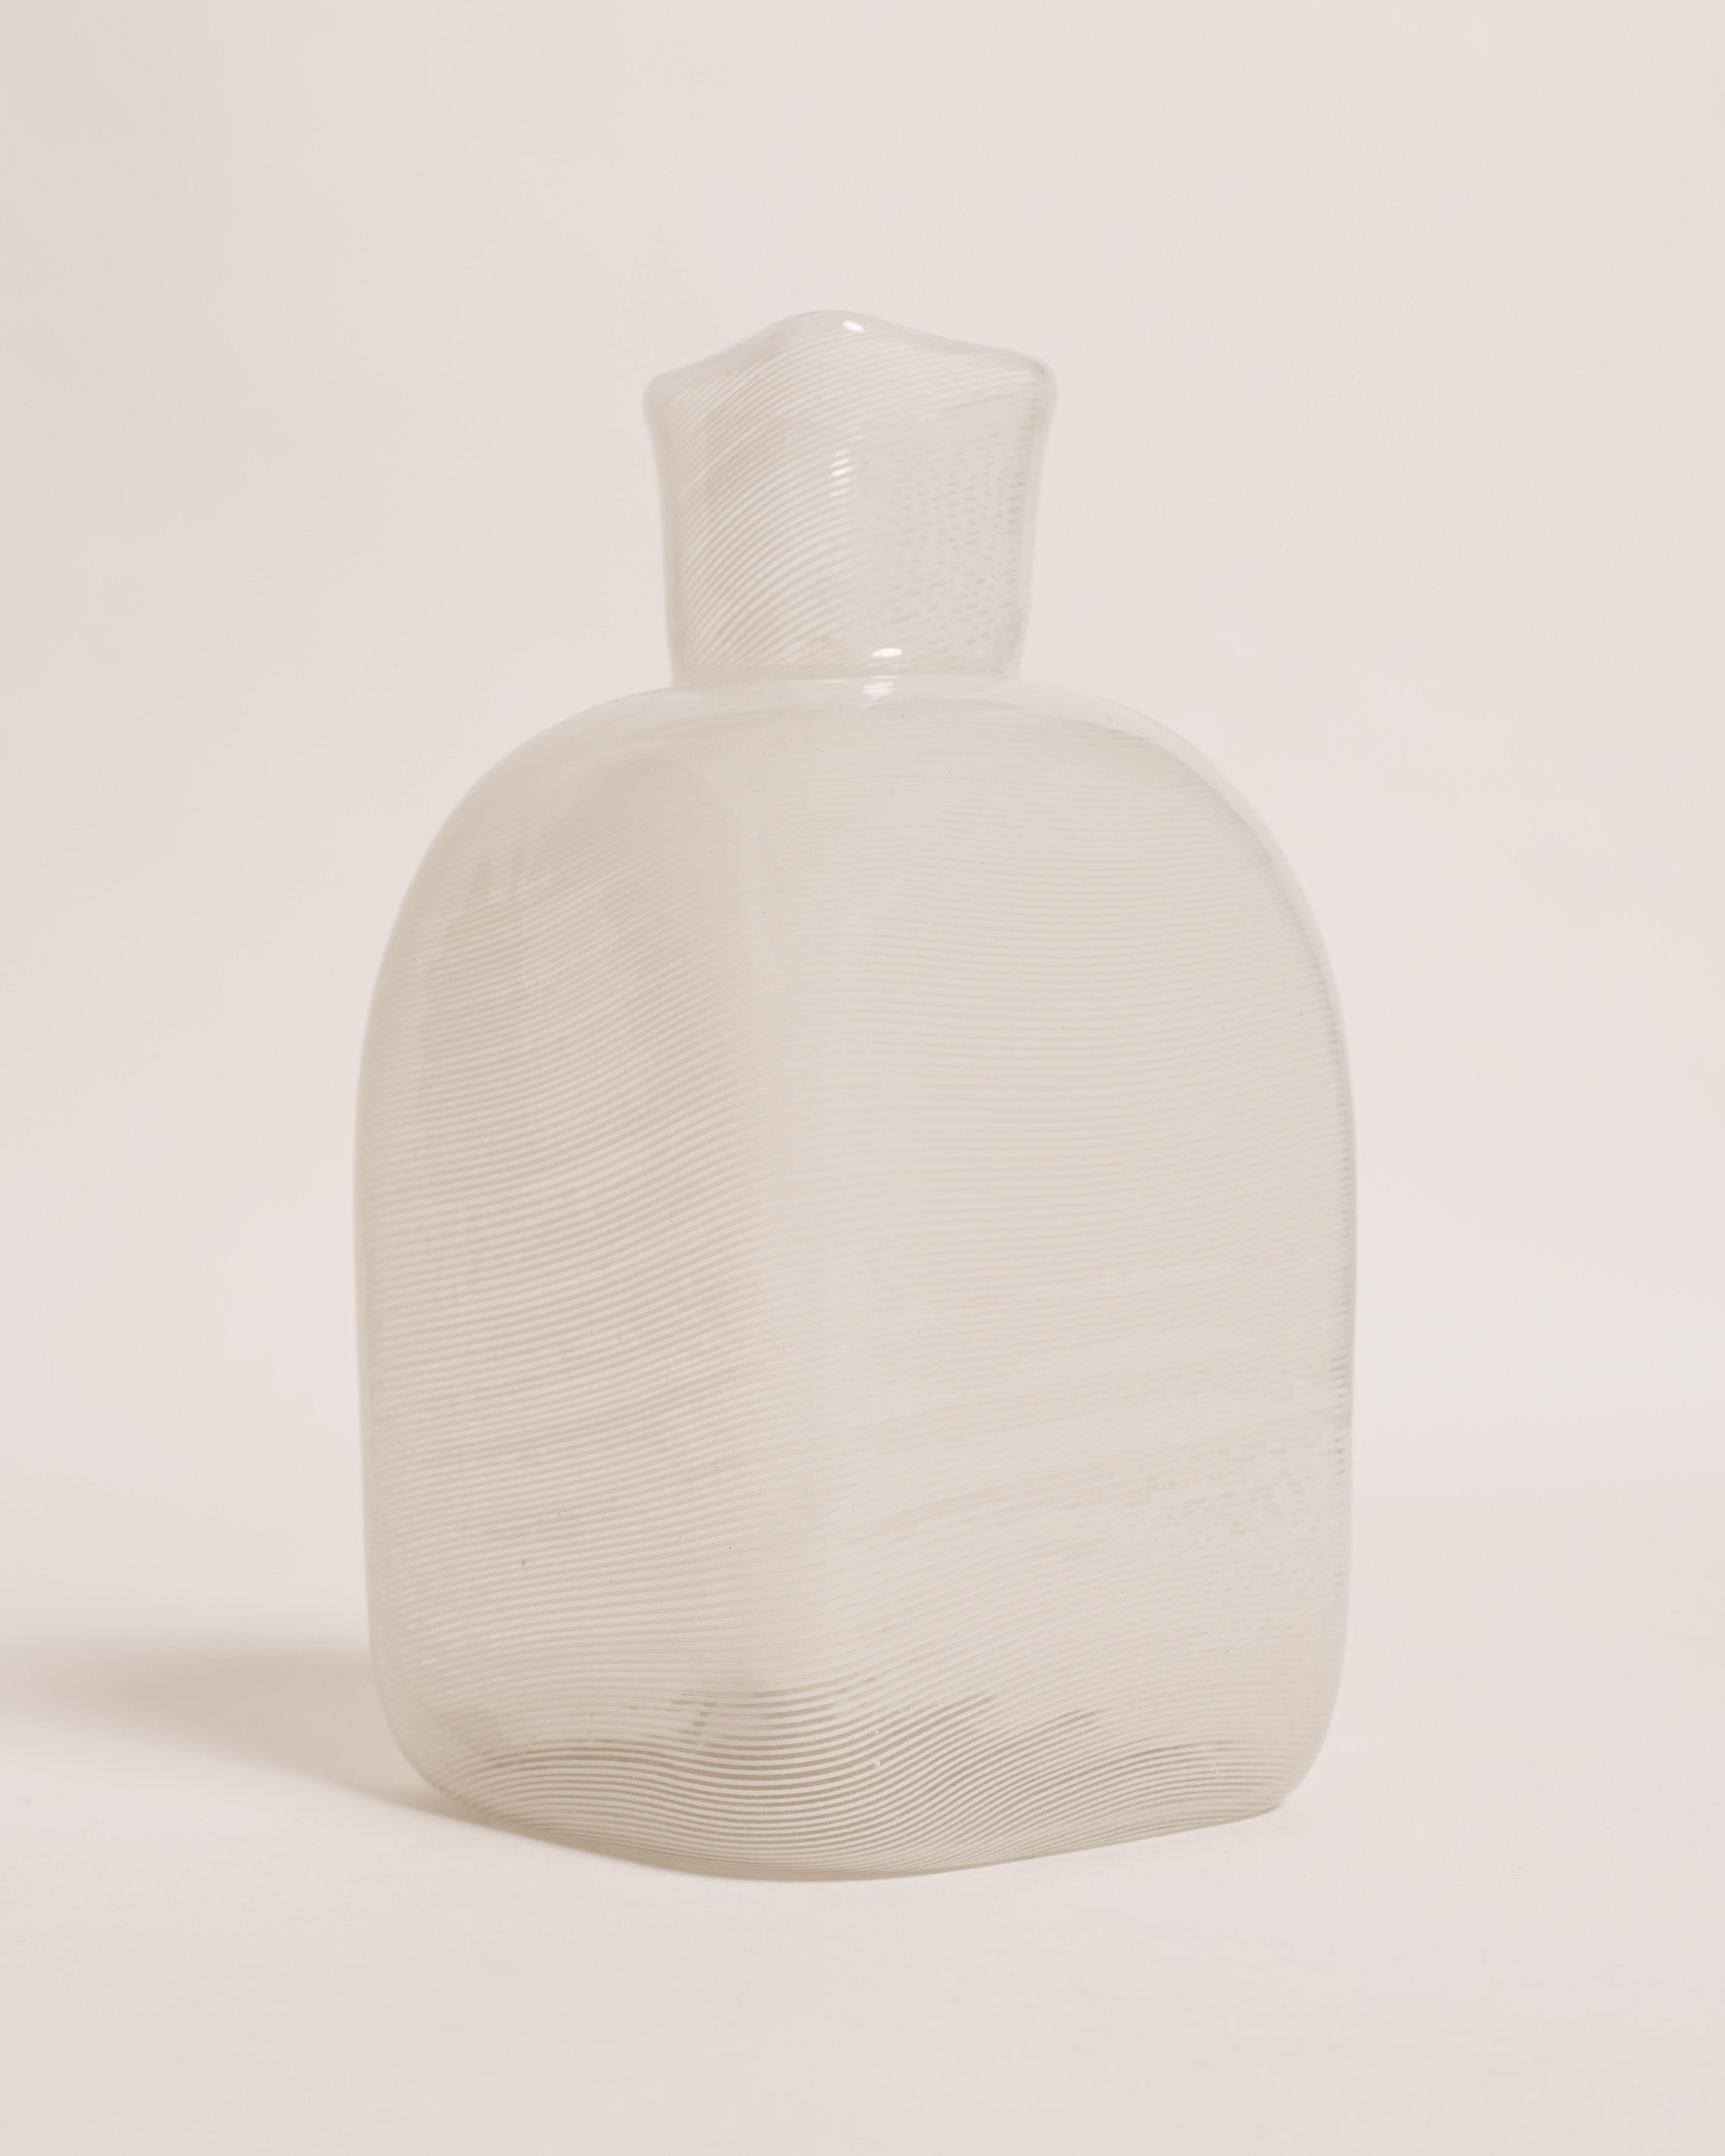 Carlo Scarpa
 'Mezza Filigrana' Vase, c. 1934
Execution: Venini & C. Cased glass, white.
Signed: Venini murano (acid stamp). 
Measure : H : 18 cm (7.08